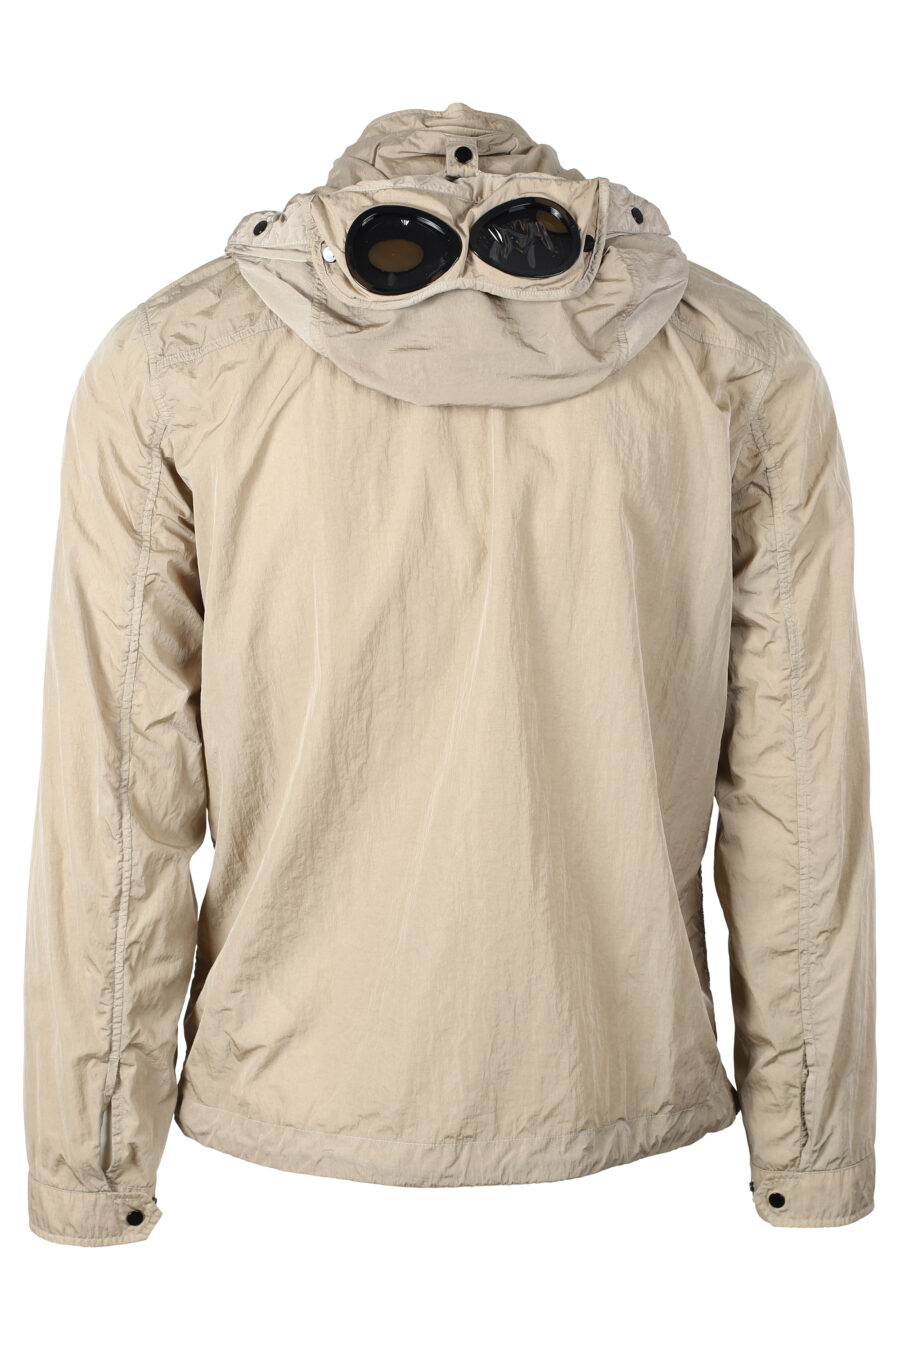 Beige jacket with adjustable glasses hood - IMG 4647